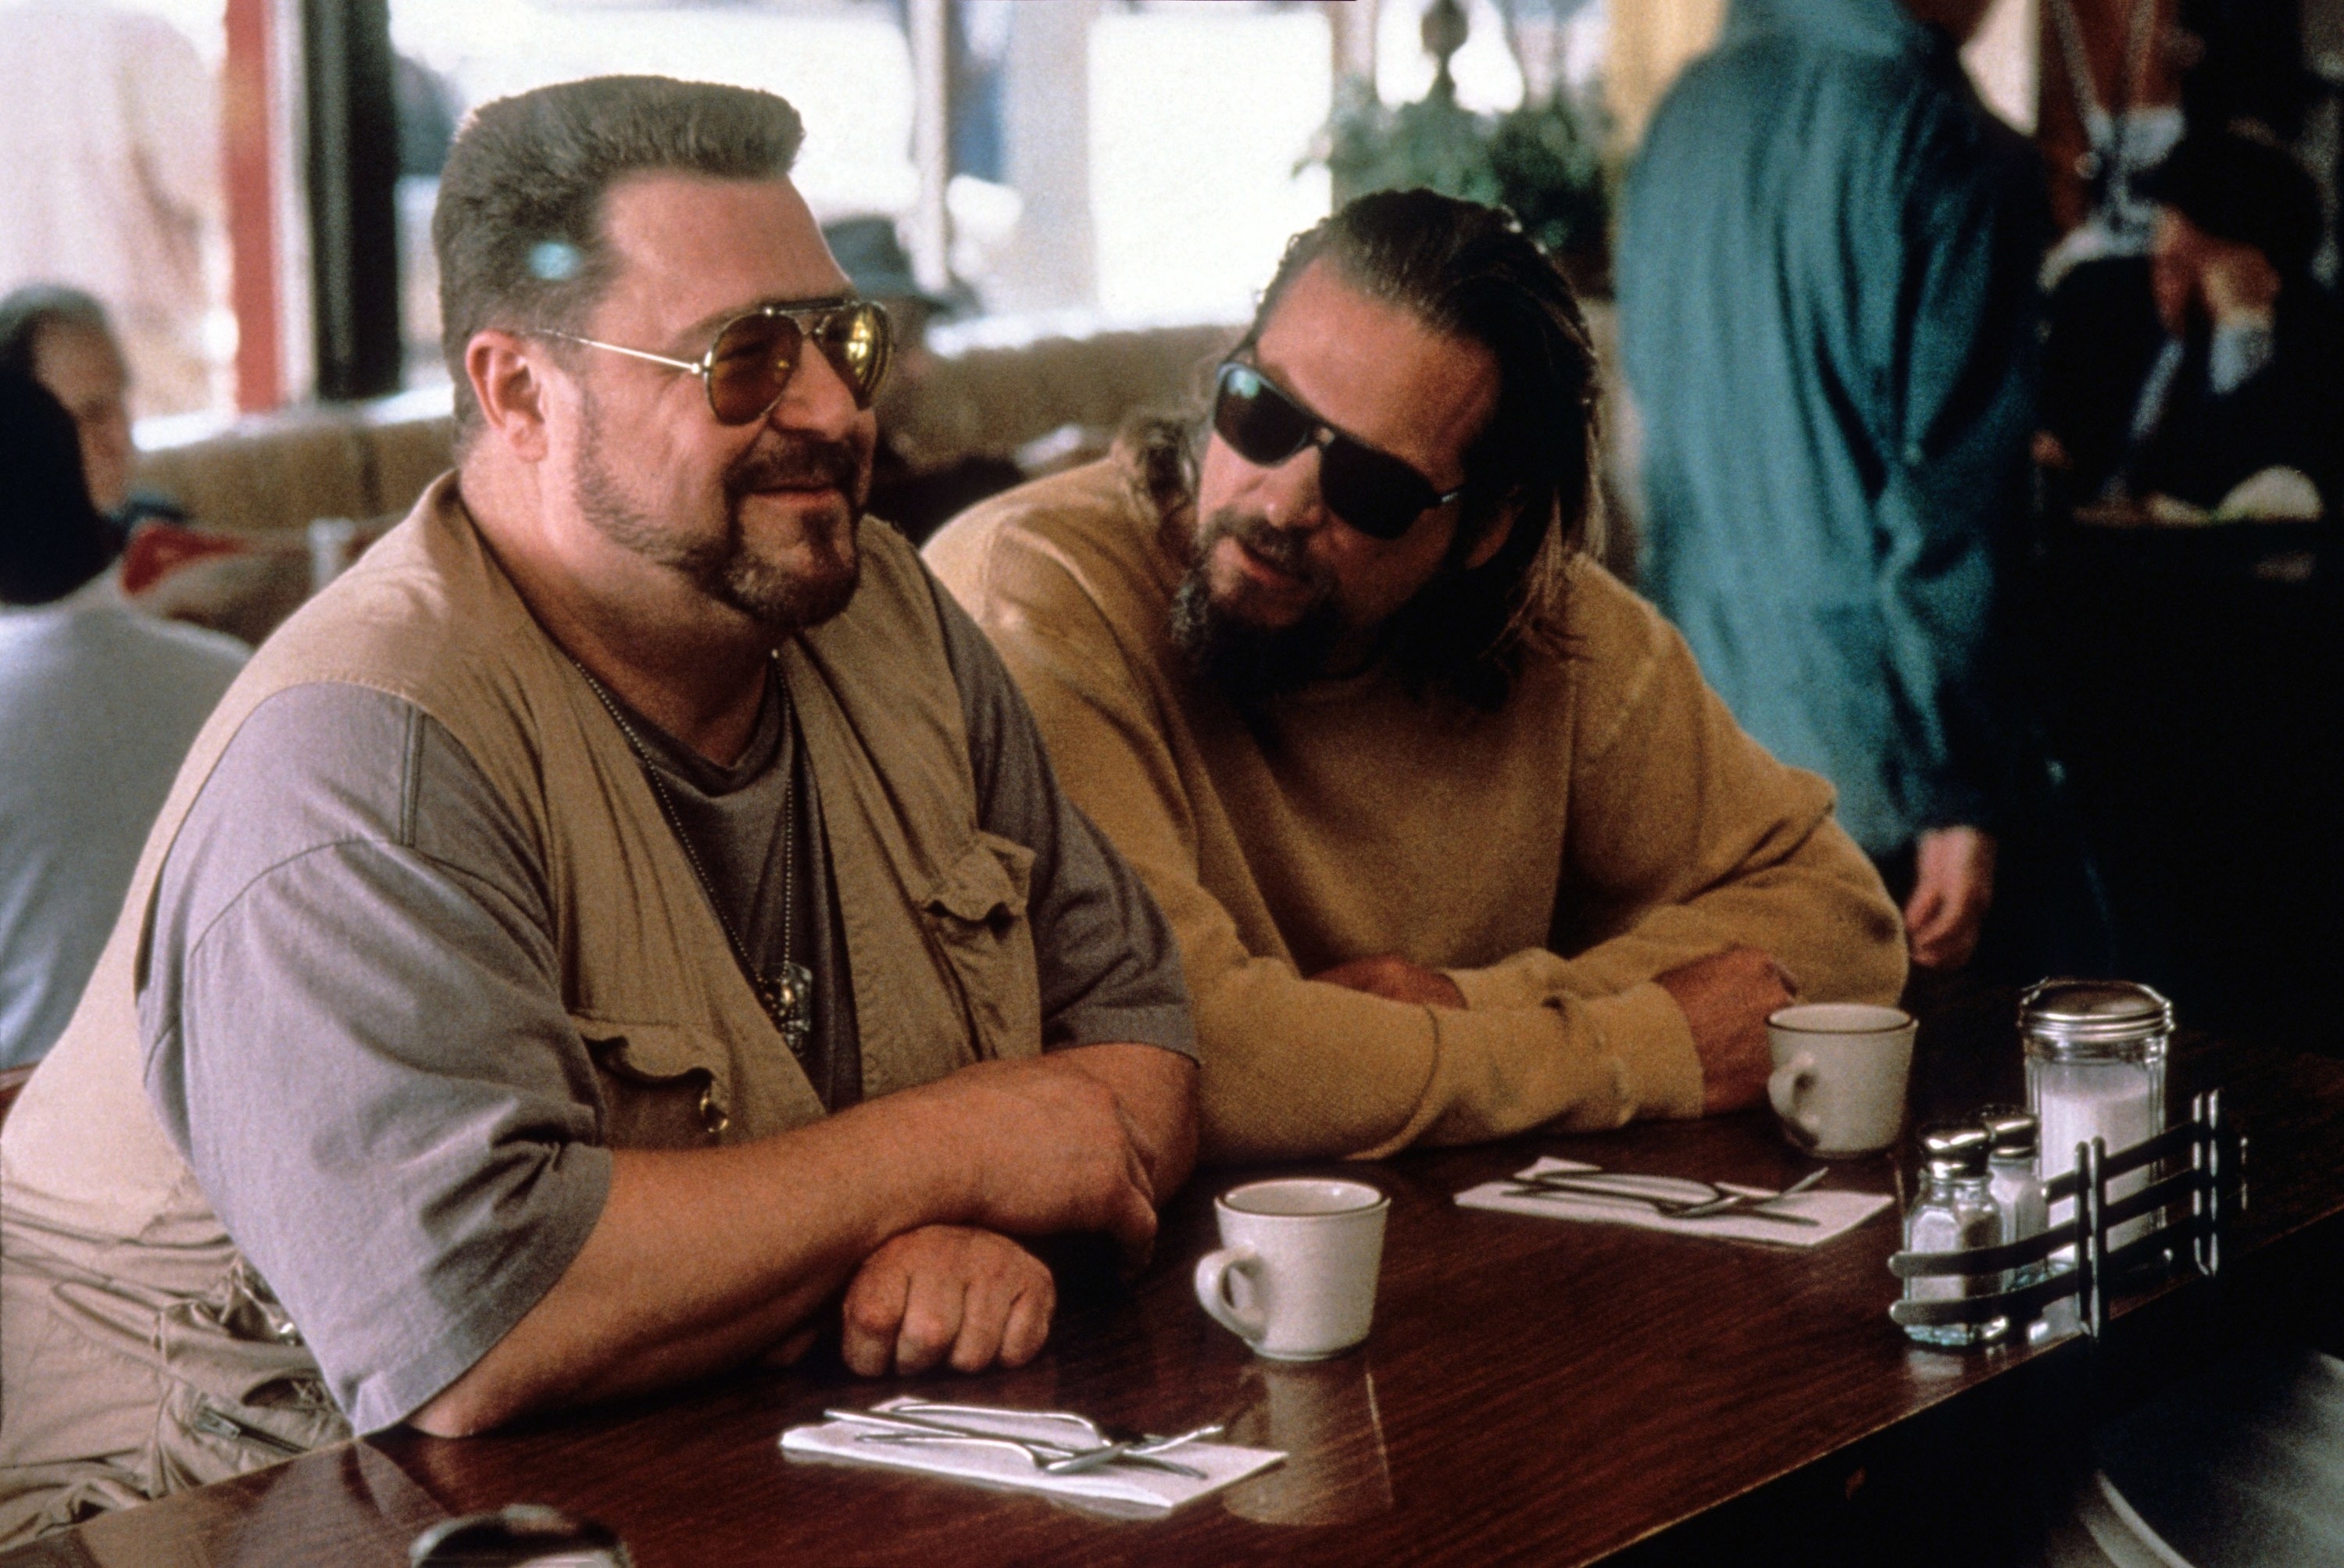 John Goodman and Jeff Bridges at a diner counter